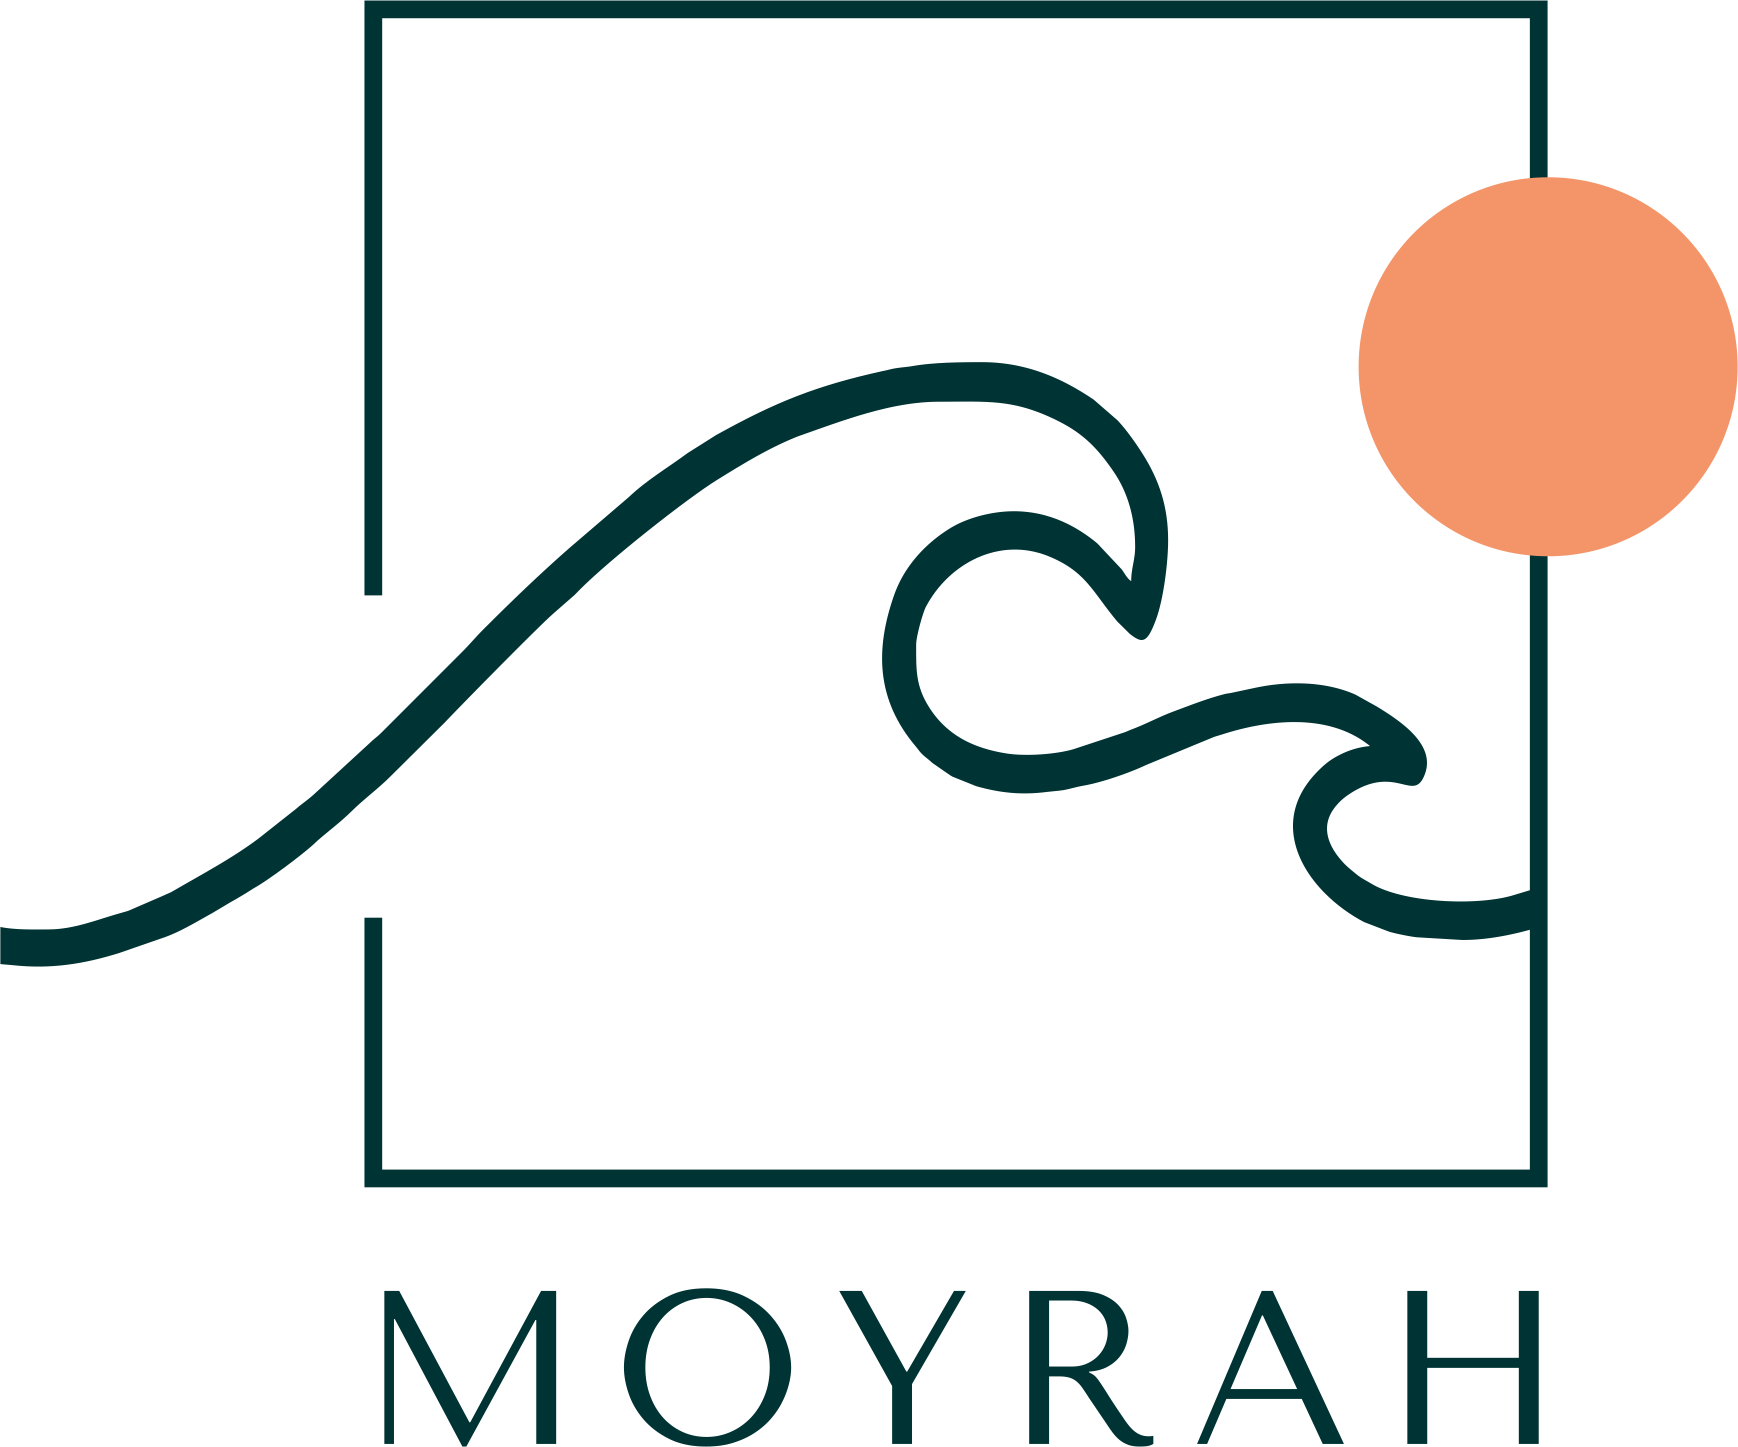 Moyrah